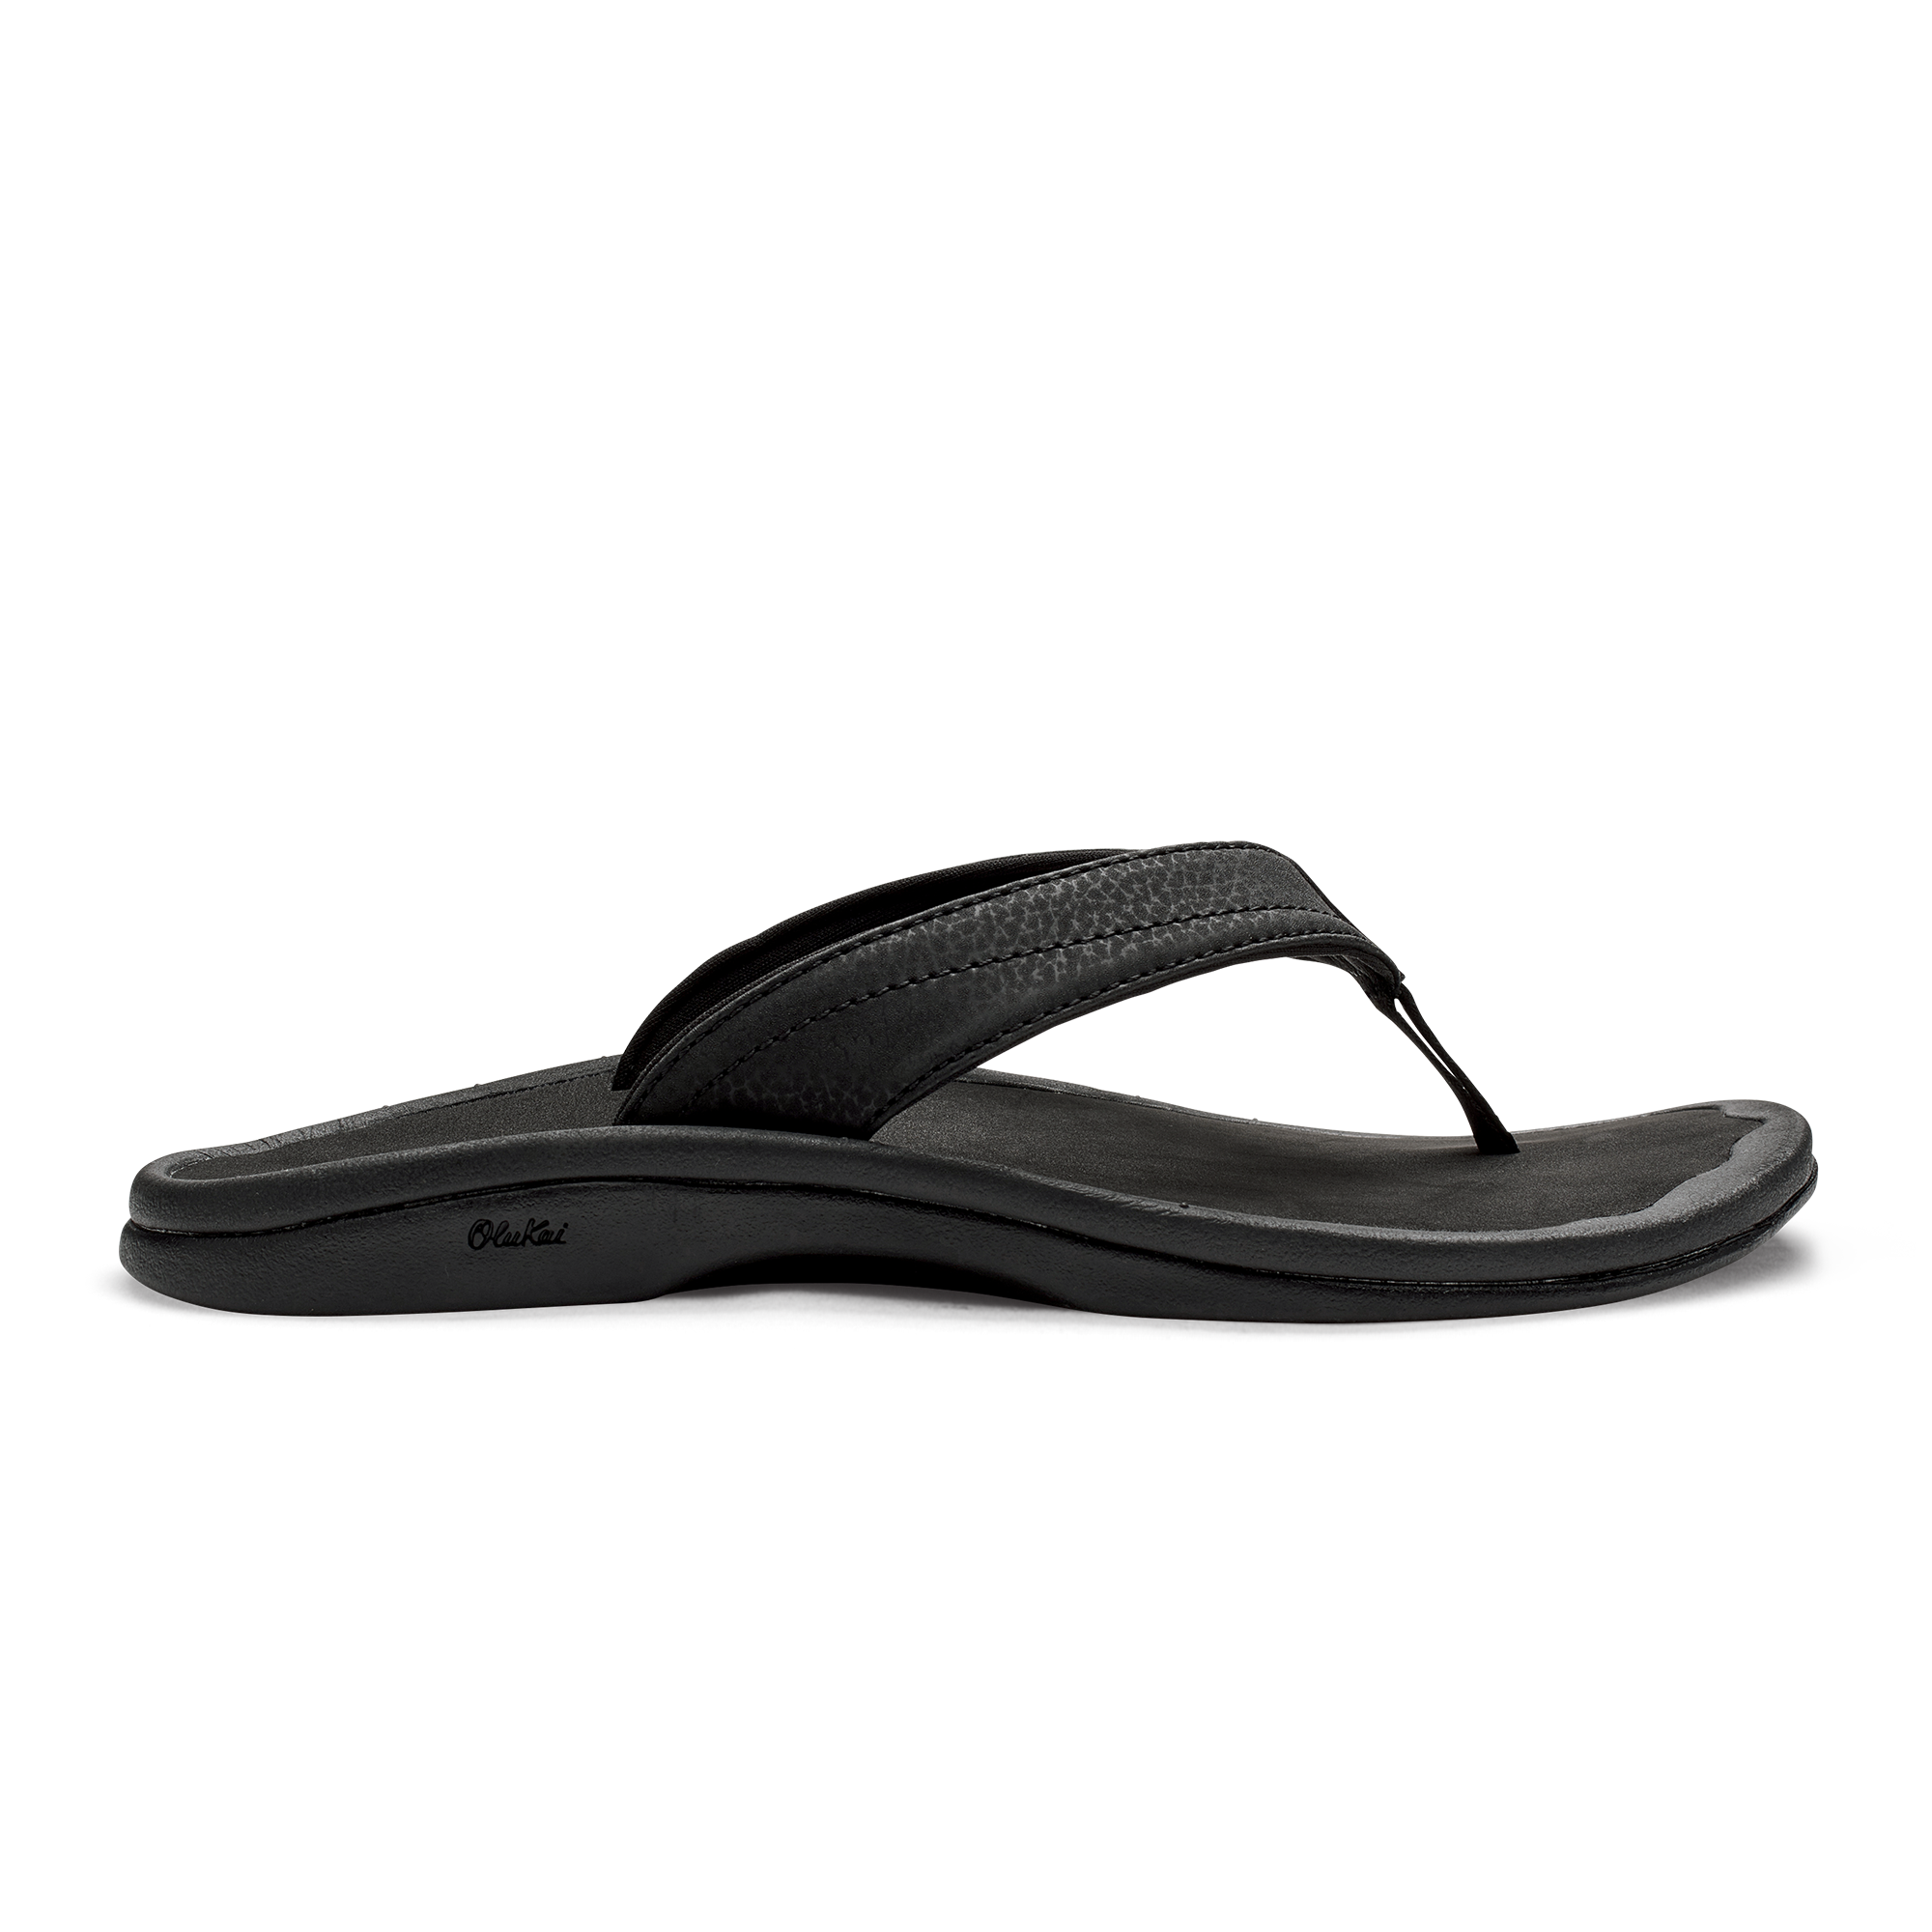 OluKai Women's Comfortable Water-Ready Sandals, Flip Flops, Slides